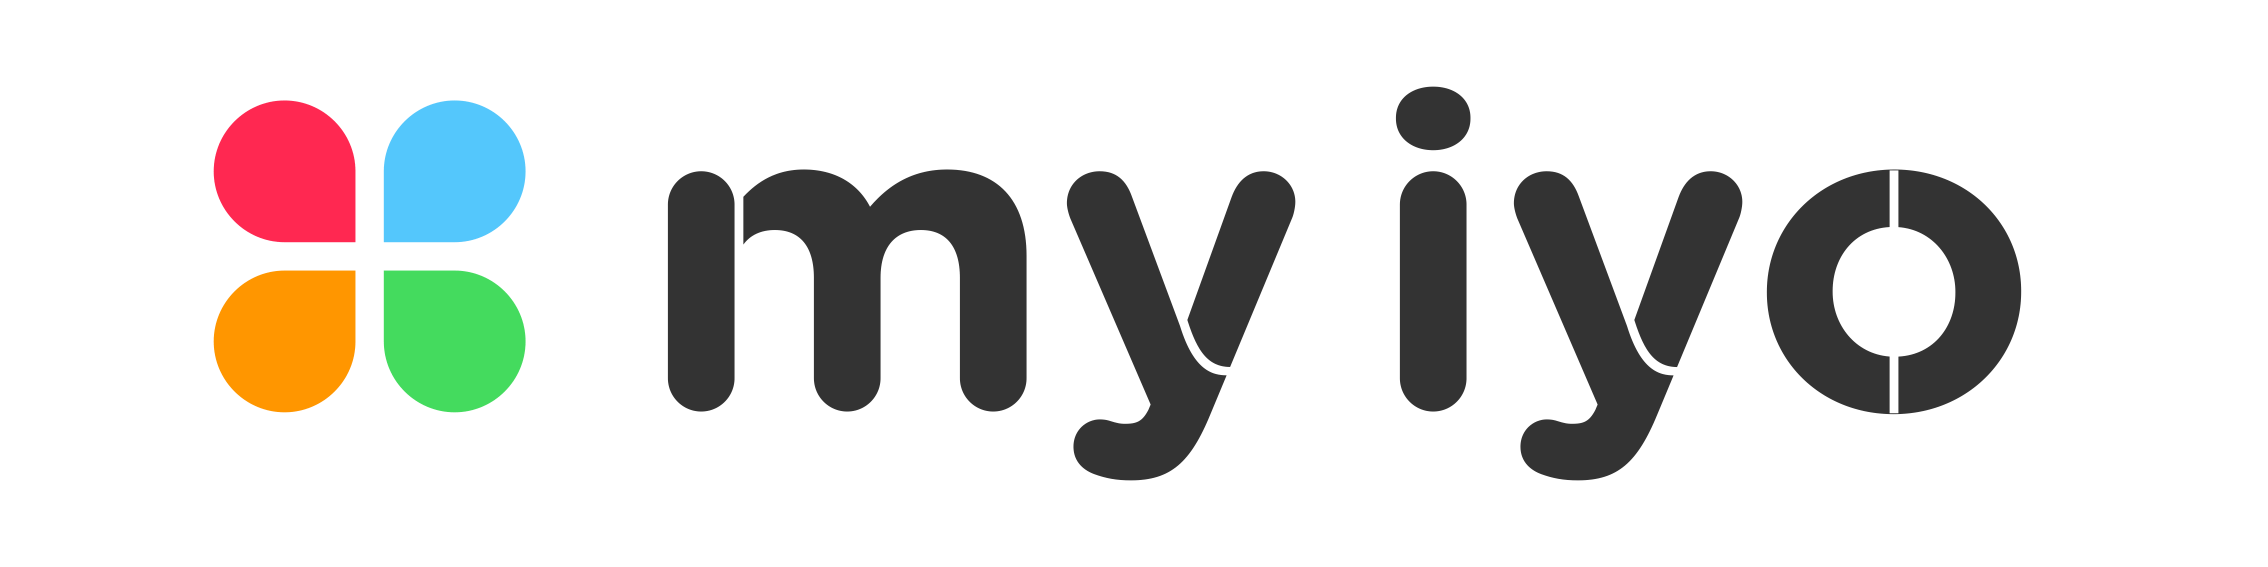 myiyo - logo